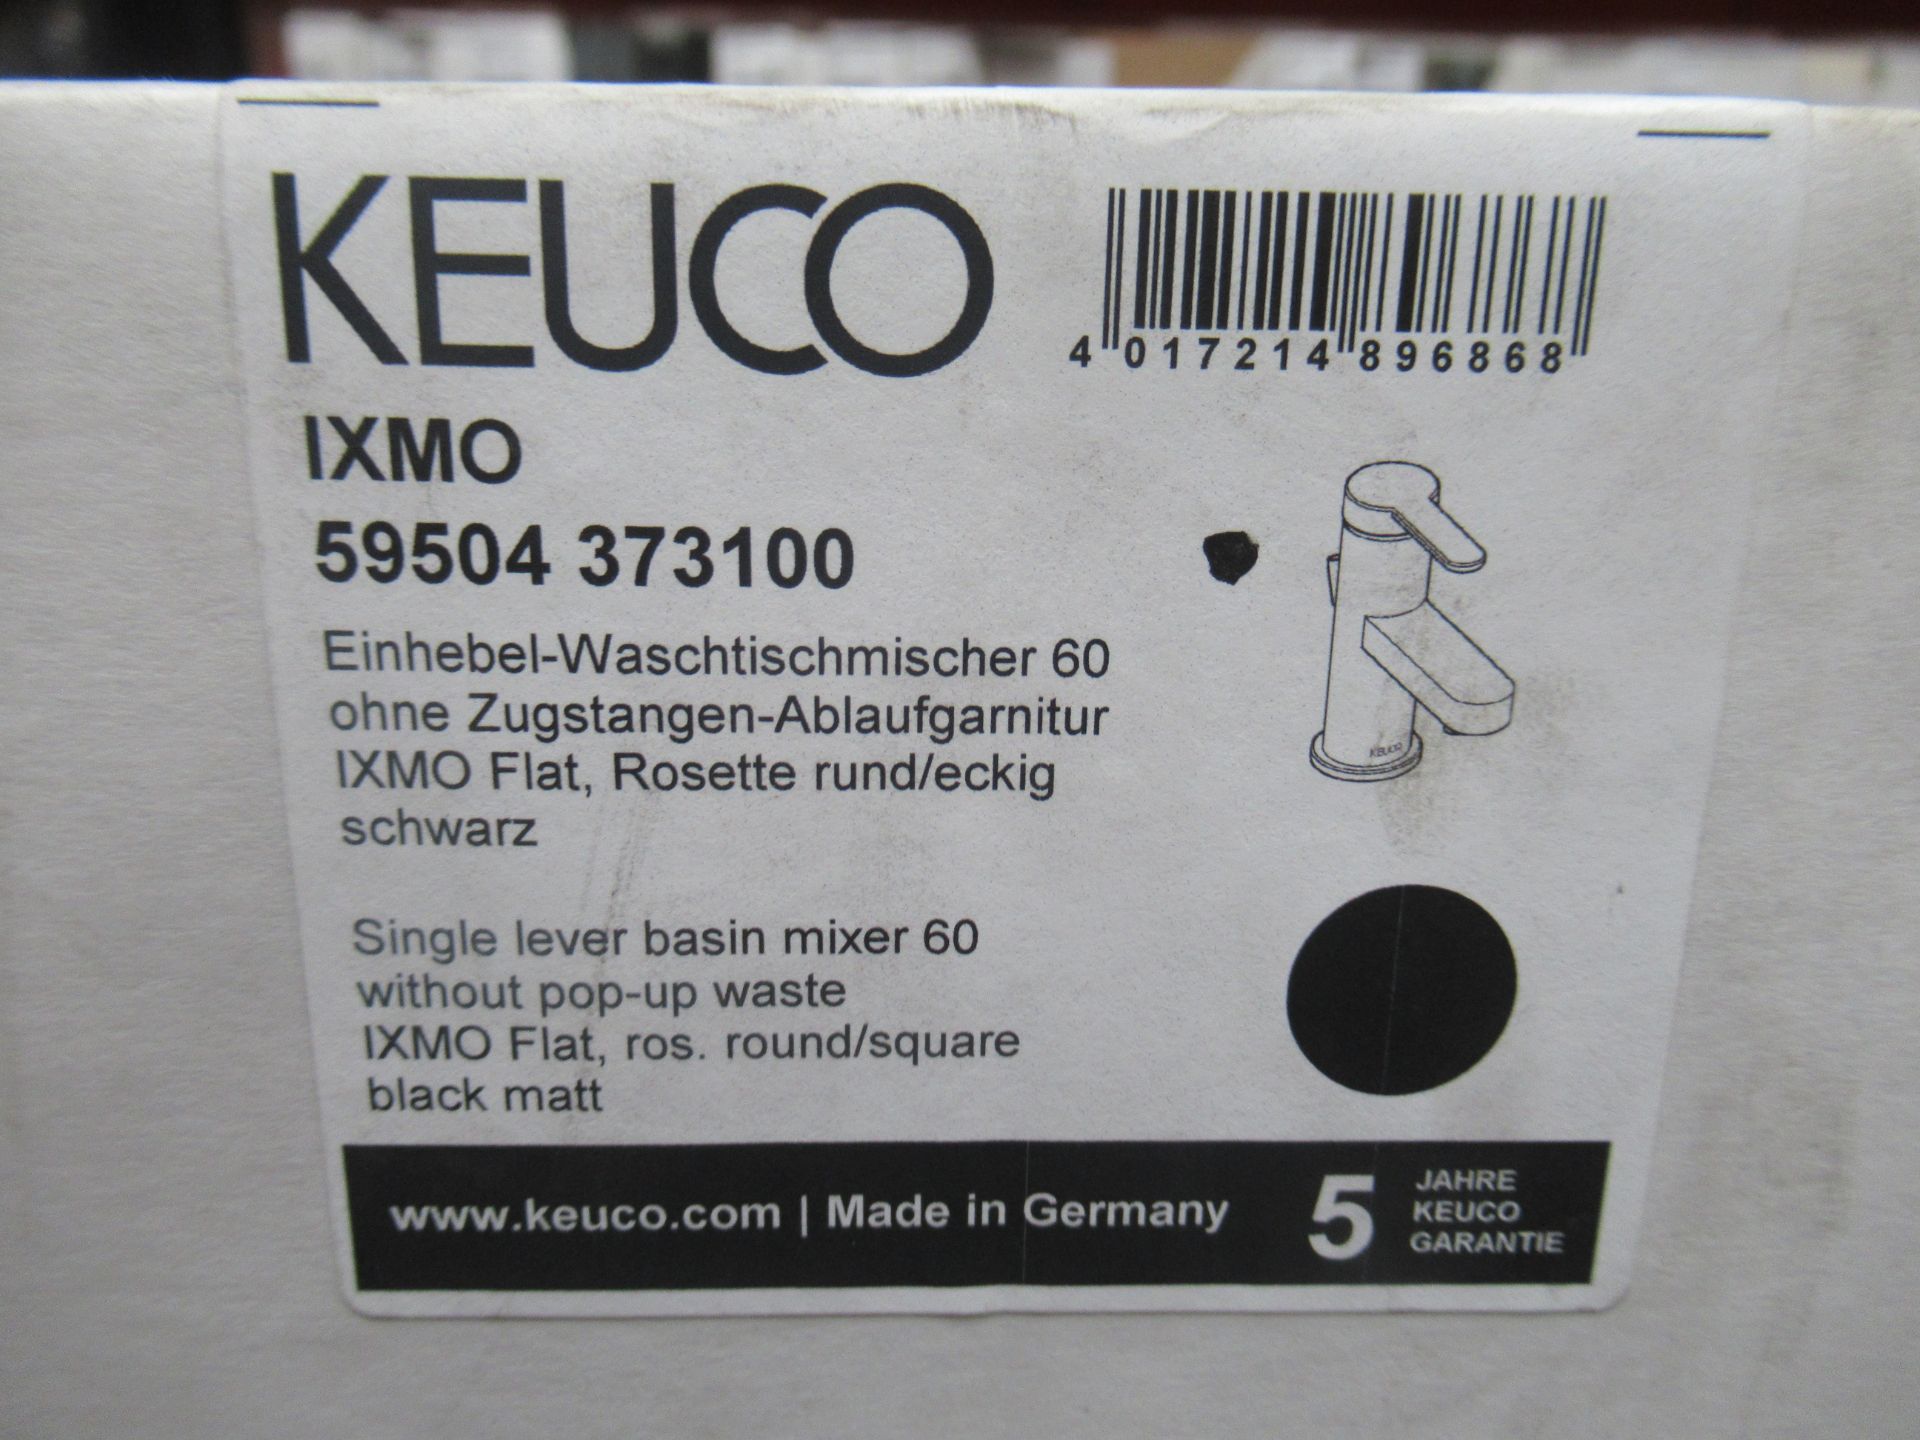 2 x Keuco IXMO Single Lever Basin Mixer 60-Tap, Black Matt, P/N 59504-372100 - Image 2 of 3